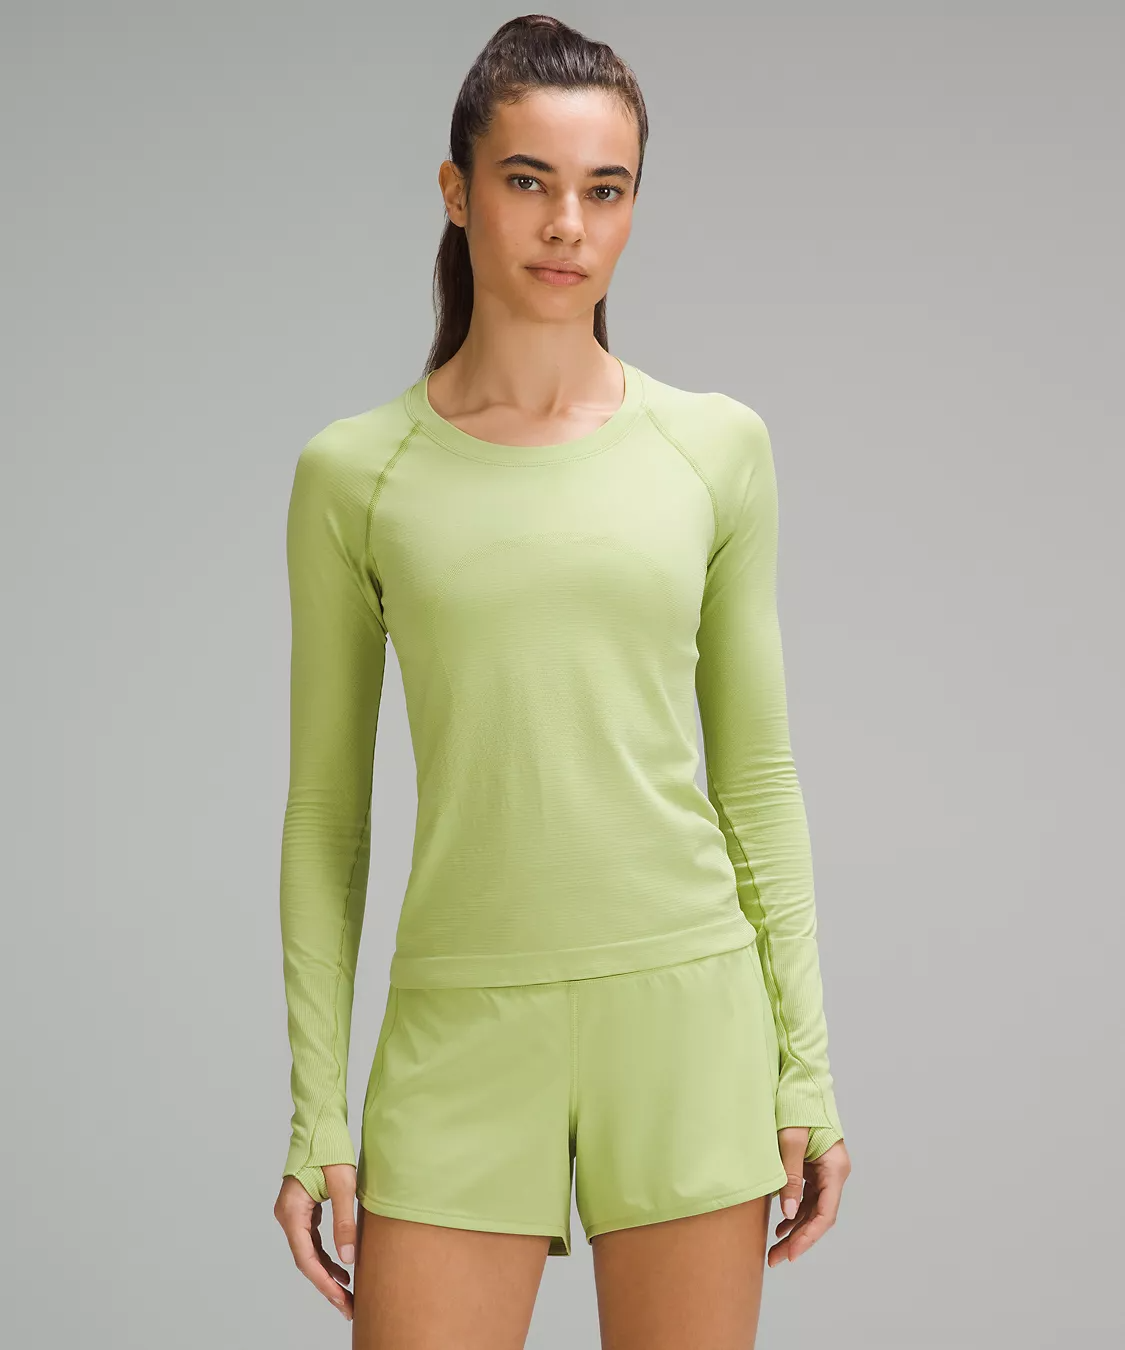 Lululemon Swiftly Tech Long Sleeve Shirt 2.0 *Race Length - Green